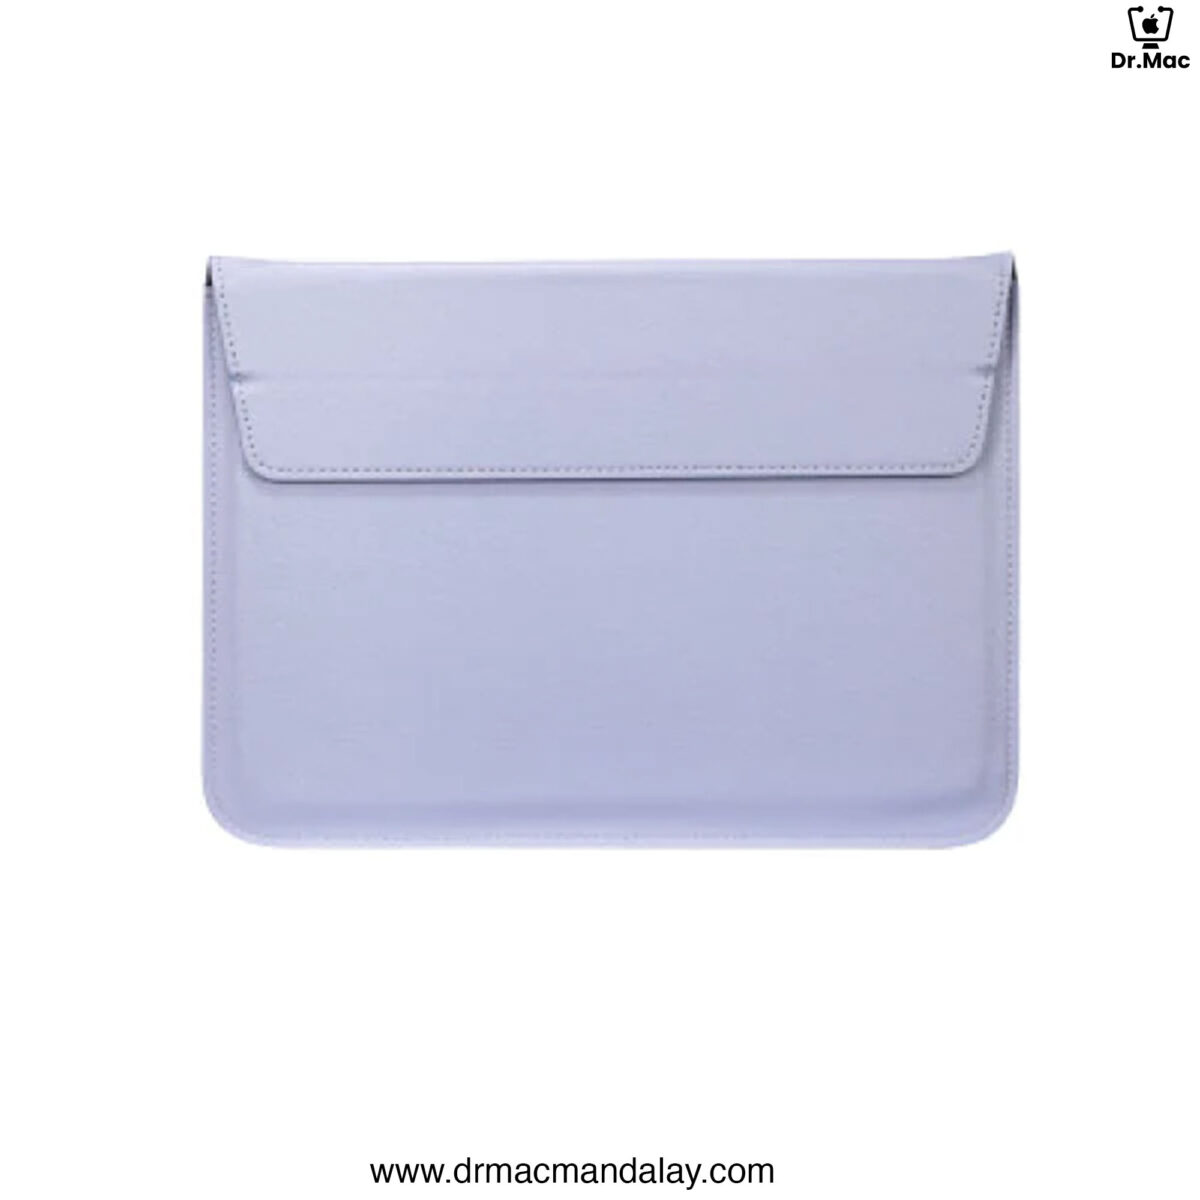 macbook 13.3" leatherultra thin foldable sleeve bag